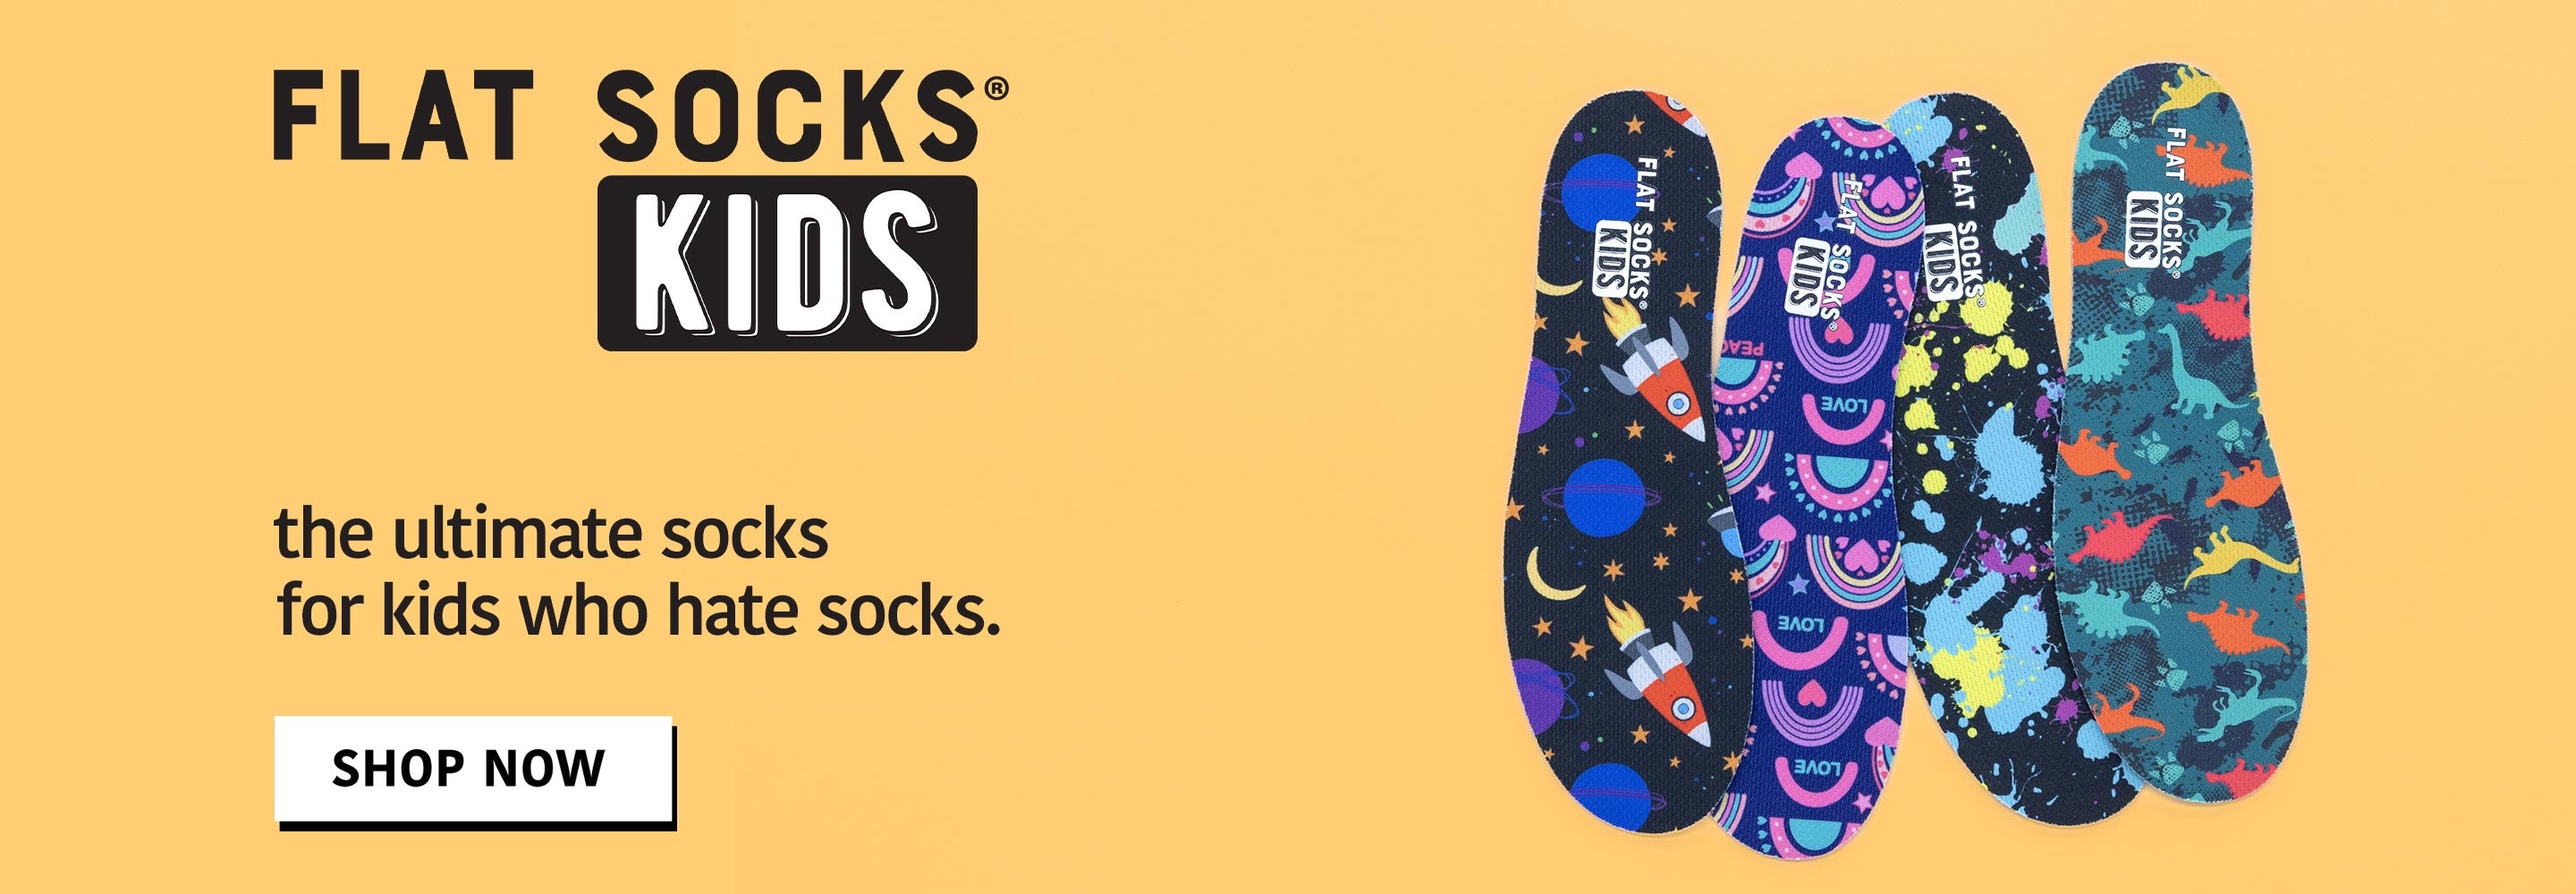 FLAT SOCKS Kids, the ultimate socks for kids who hate socks. Shop now.